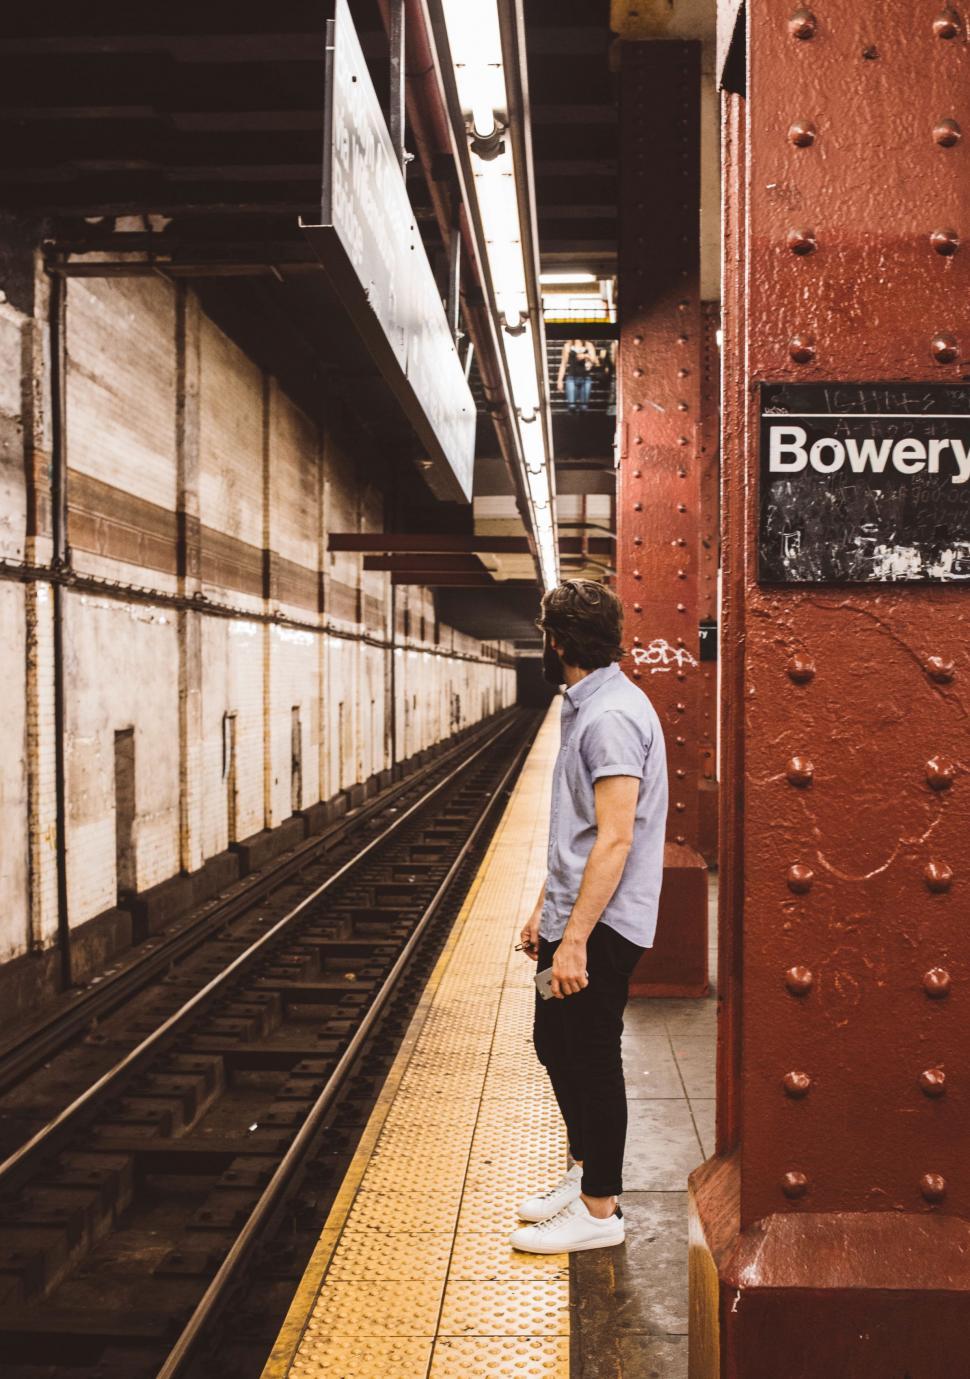 Free Image of Man Standing on Platform Next to Train 